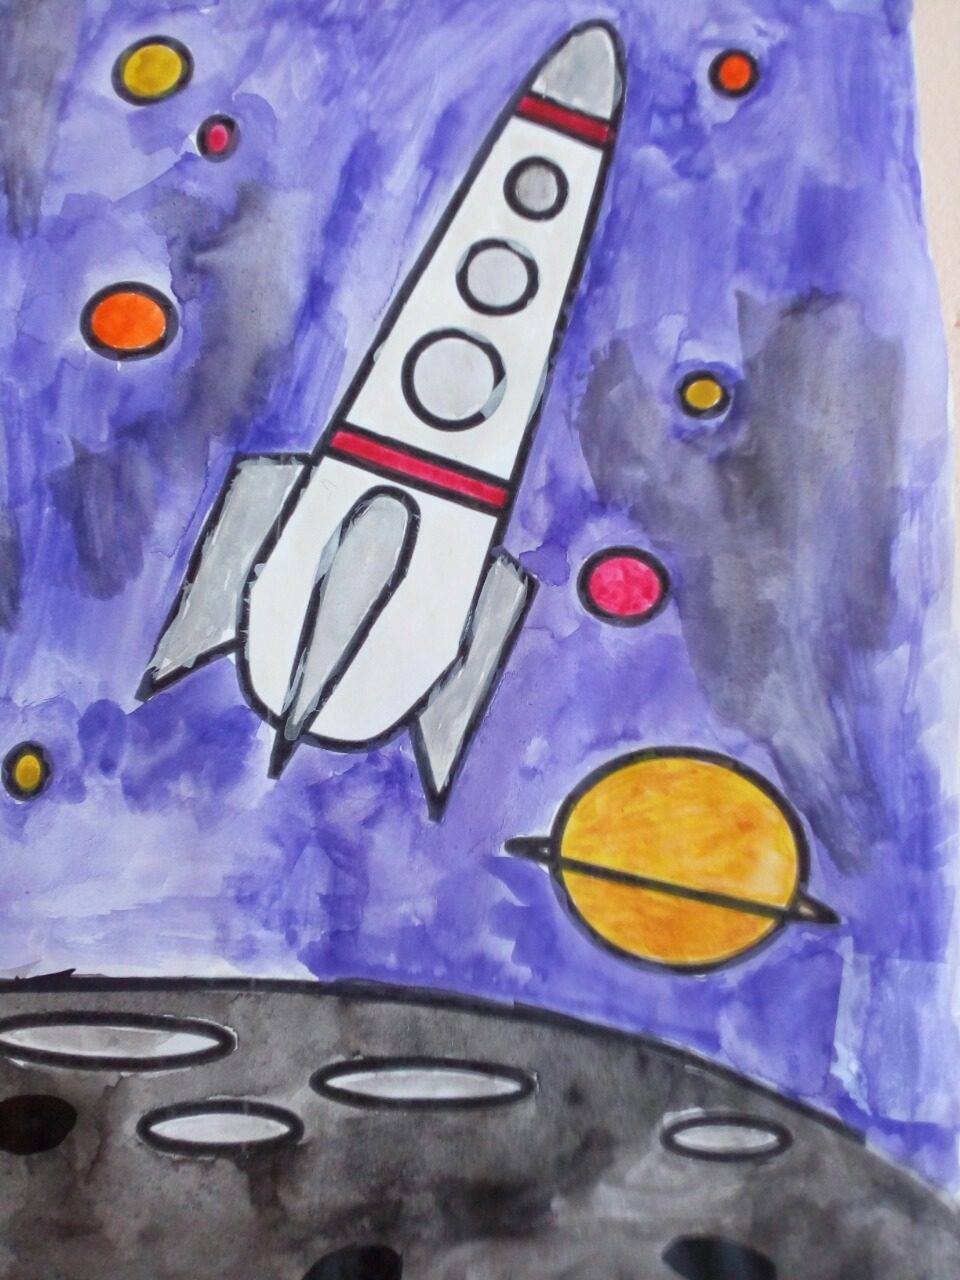 Рисунок на тему космонавтики 5 класс. Рисунок на тему космос. Рисунок на космическую тему. Детский рисунок на тему космос. Детский рисунок ко Дню космонавтики.